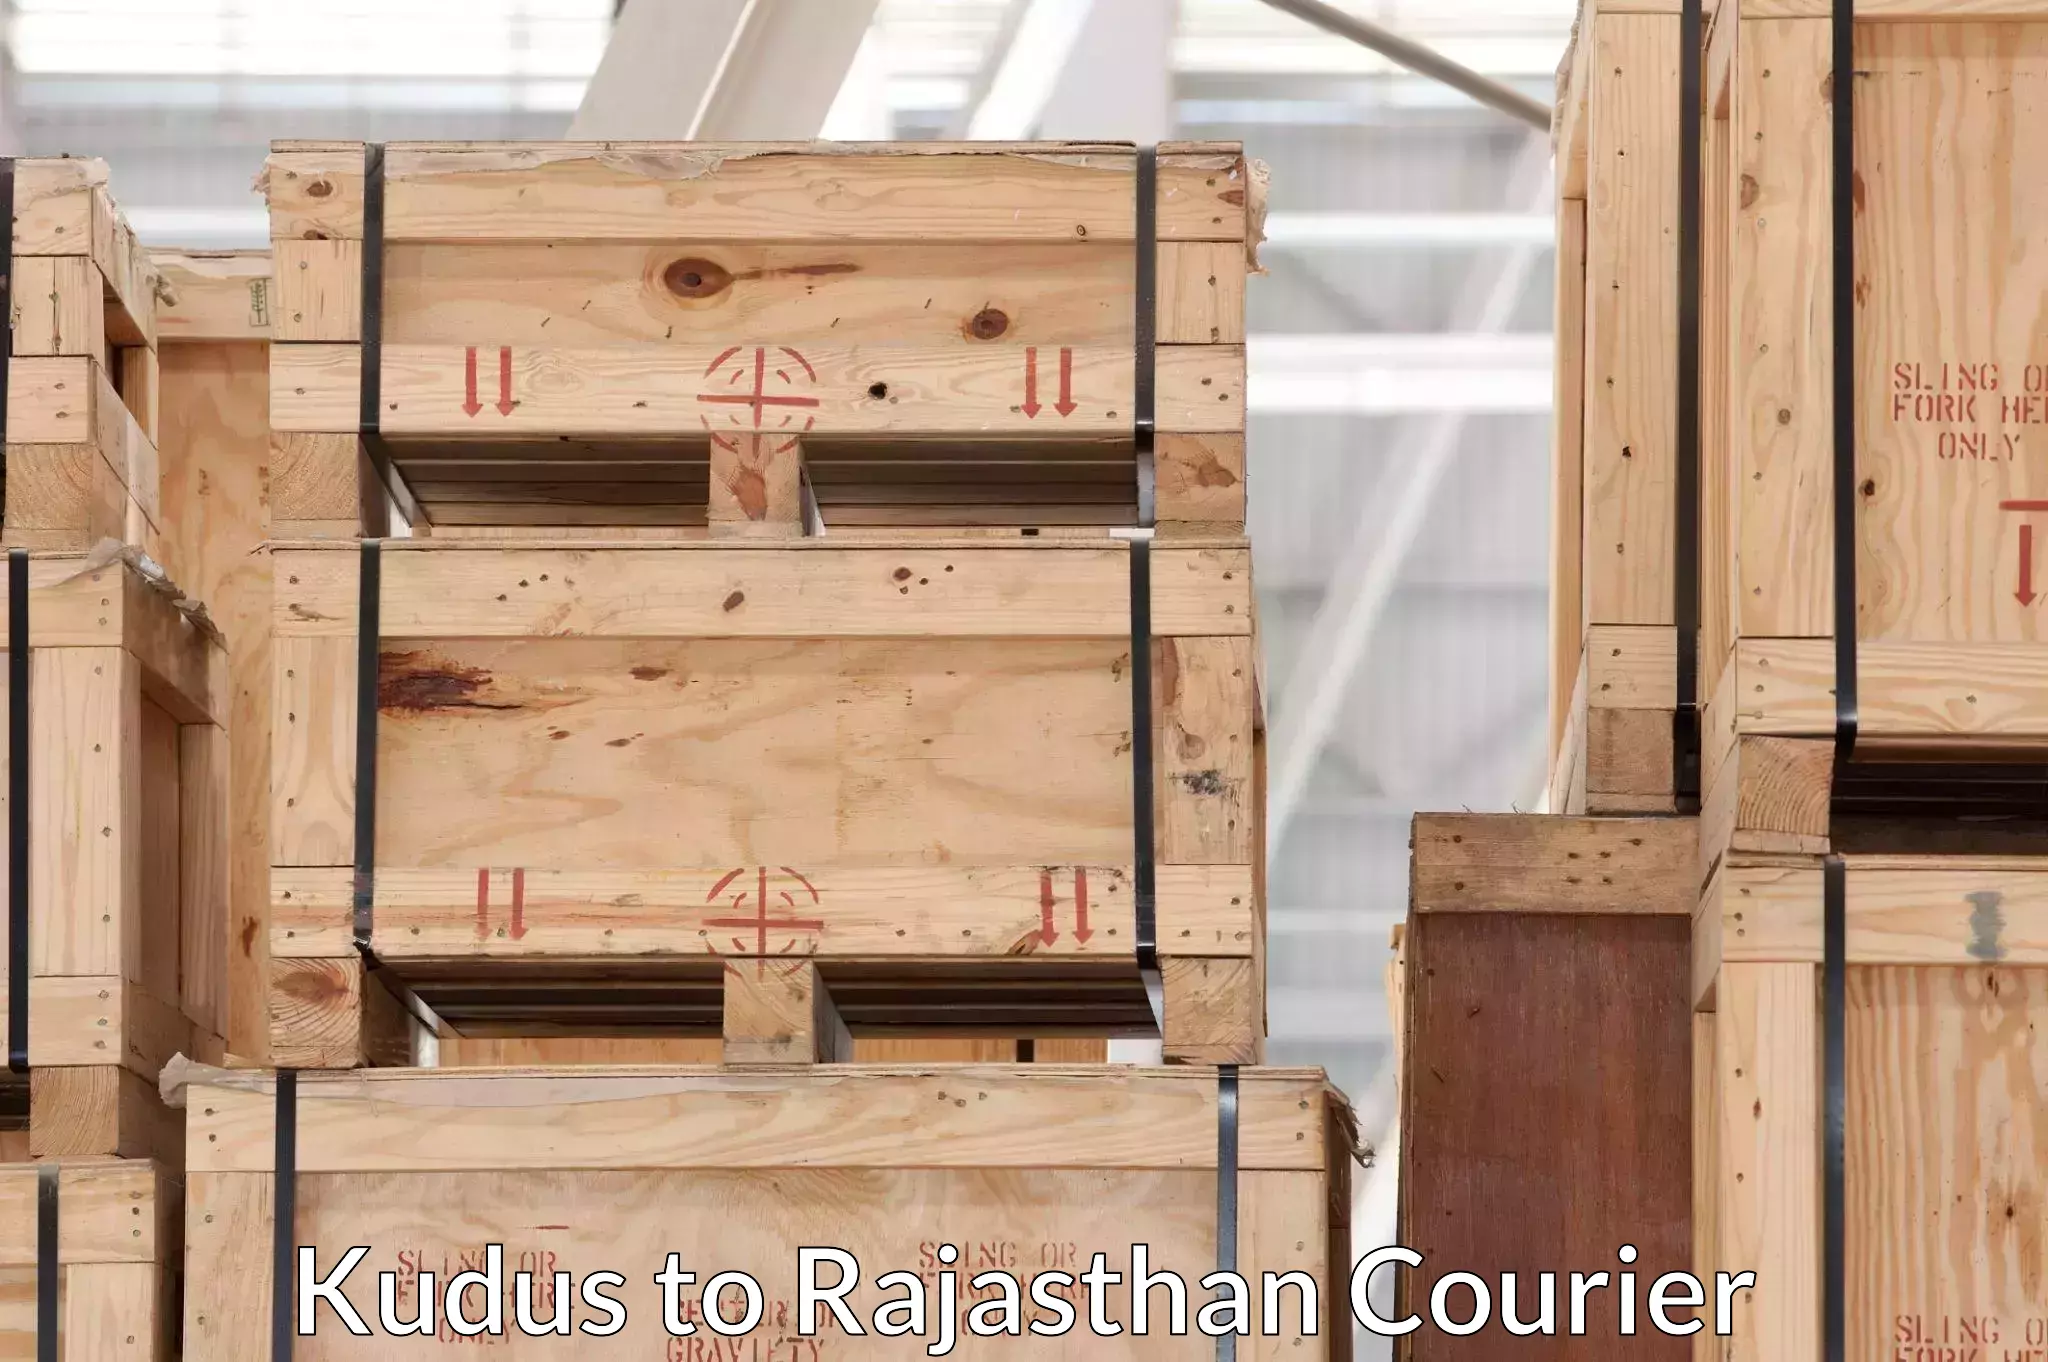 Trusted moving company Kudus to Paota